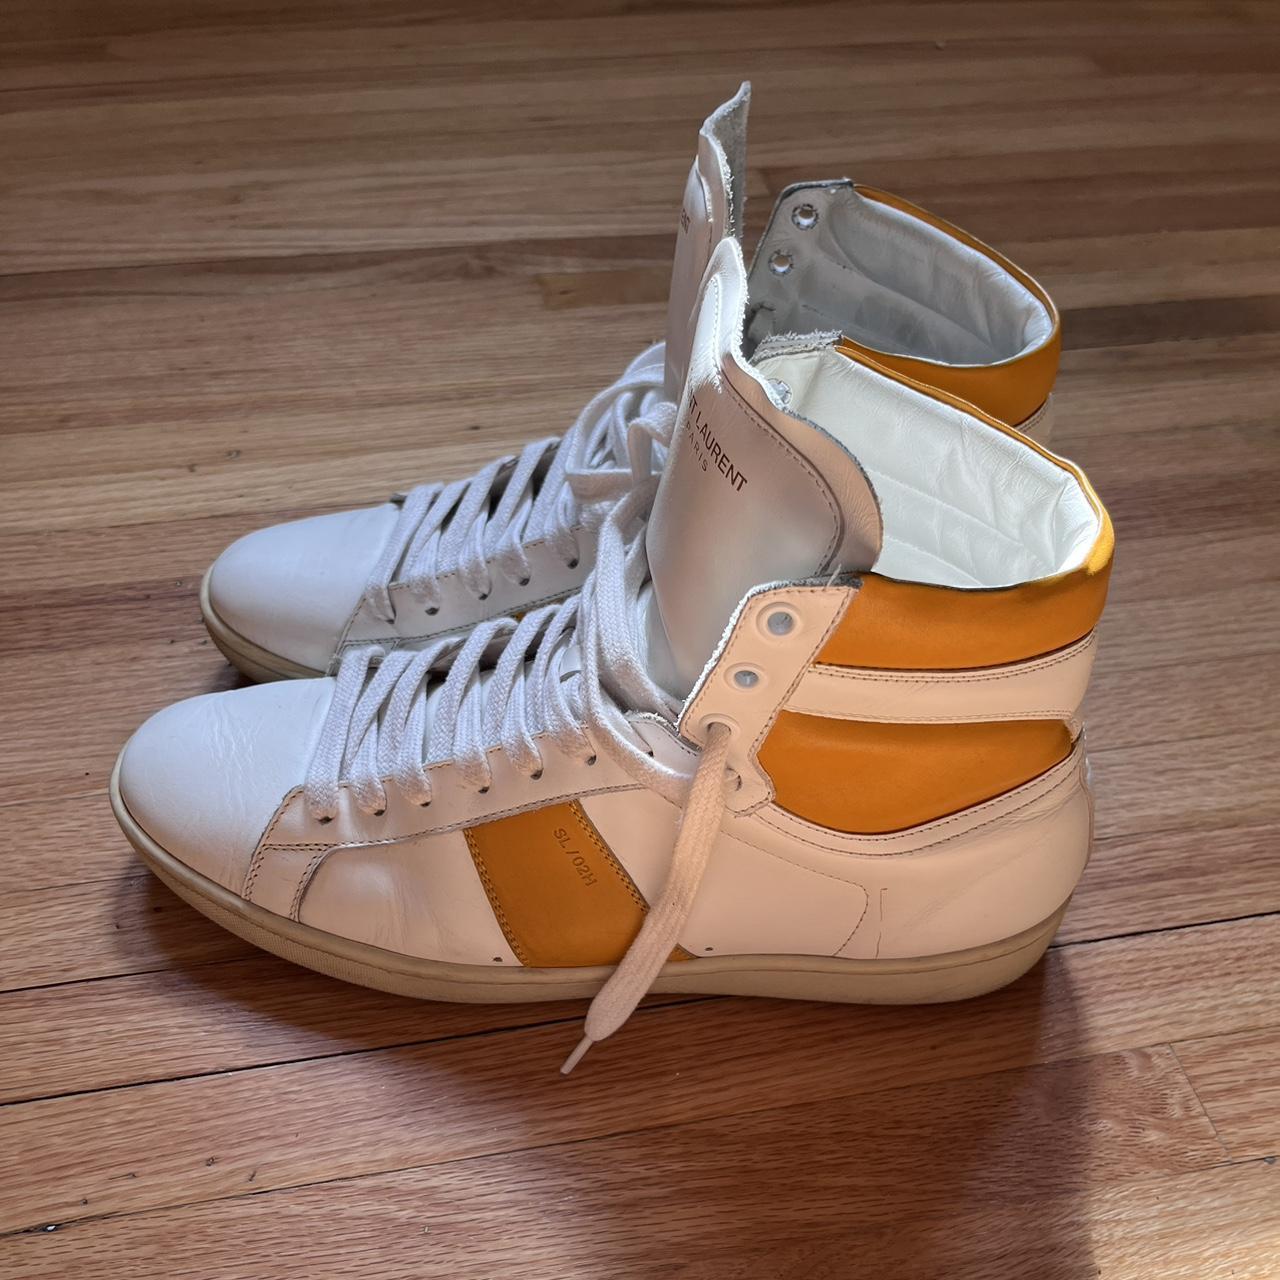 Saint Laurent Sneakers Mens Original dust bag No box - Depop